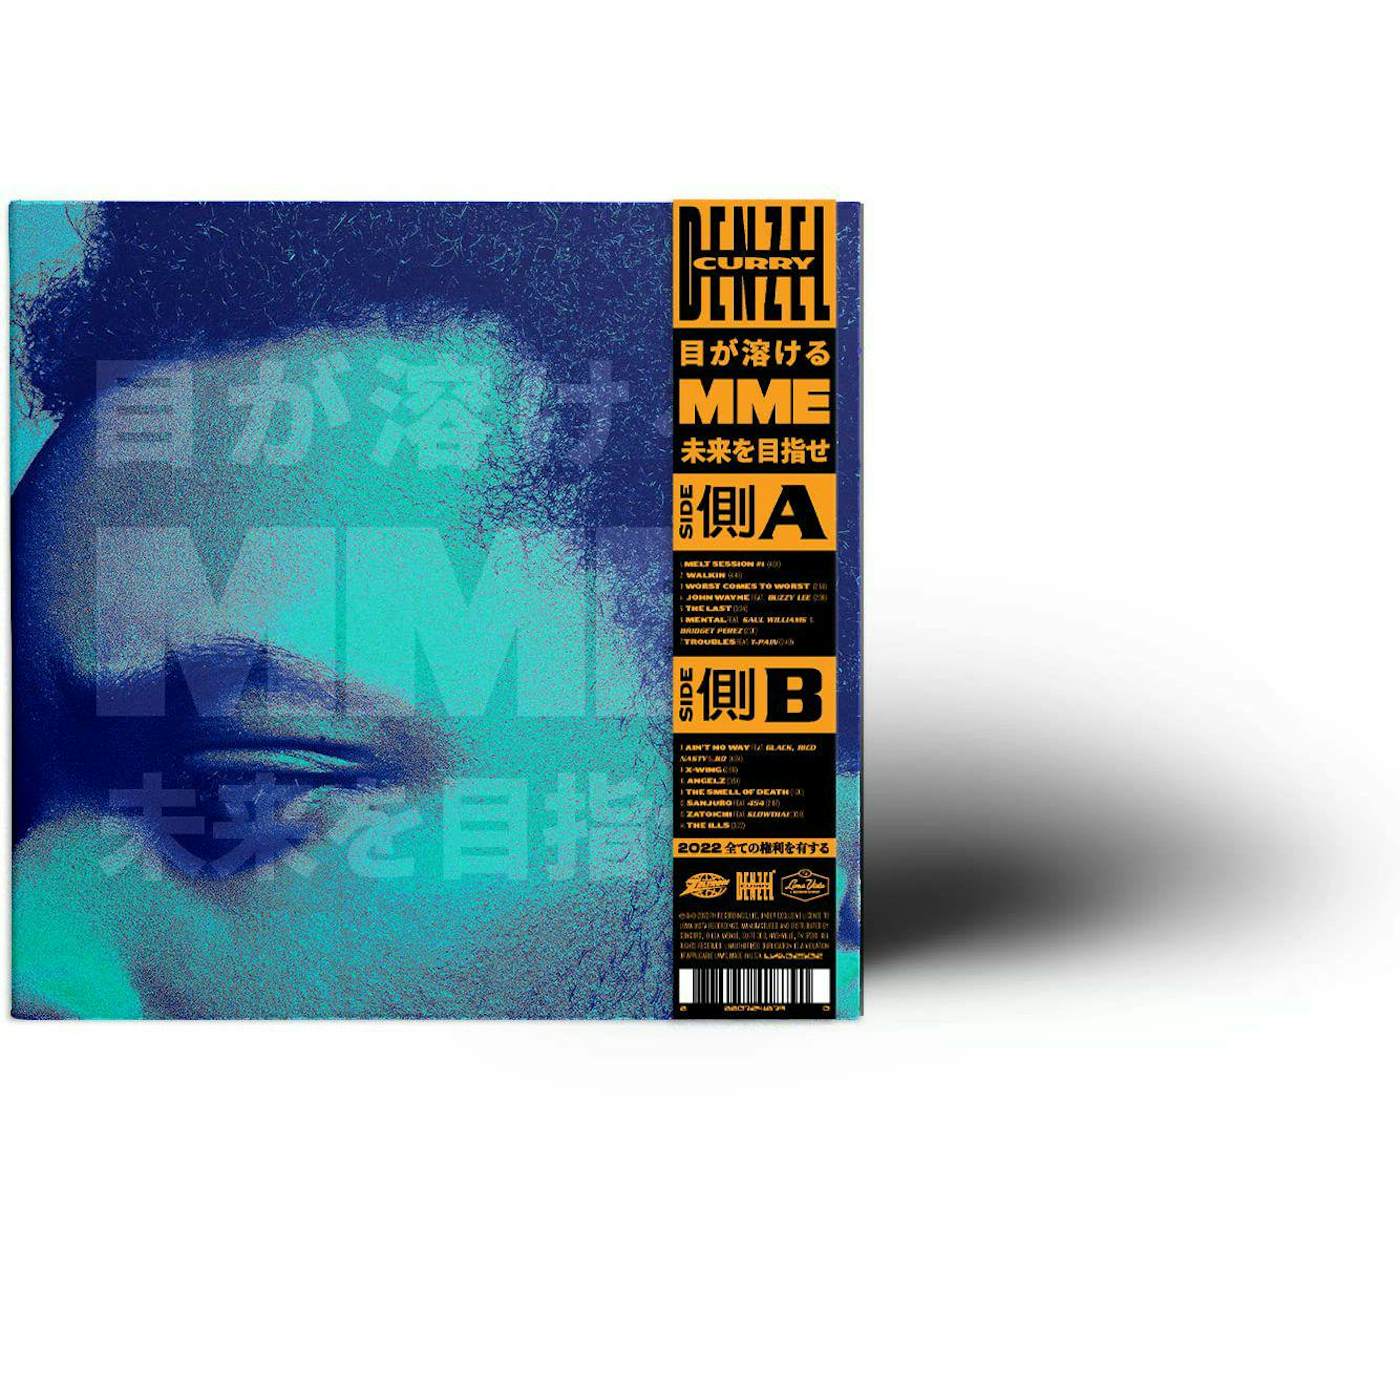 Denzel Curry TA13OO (Red Slushie) Vinyl Record